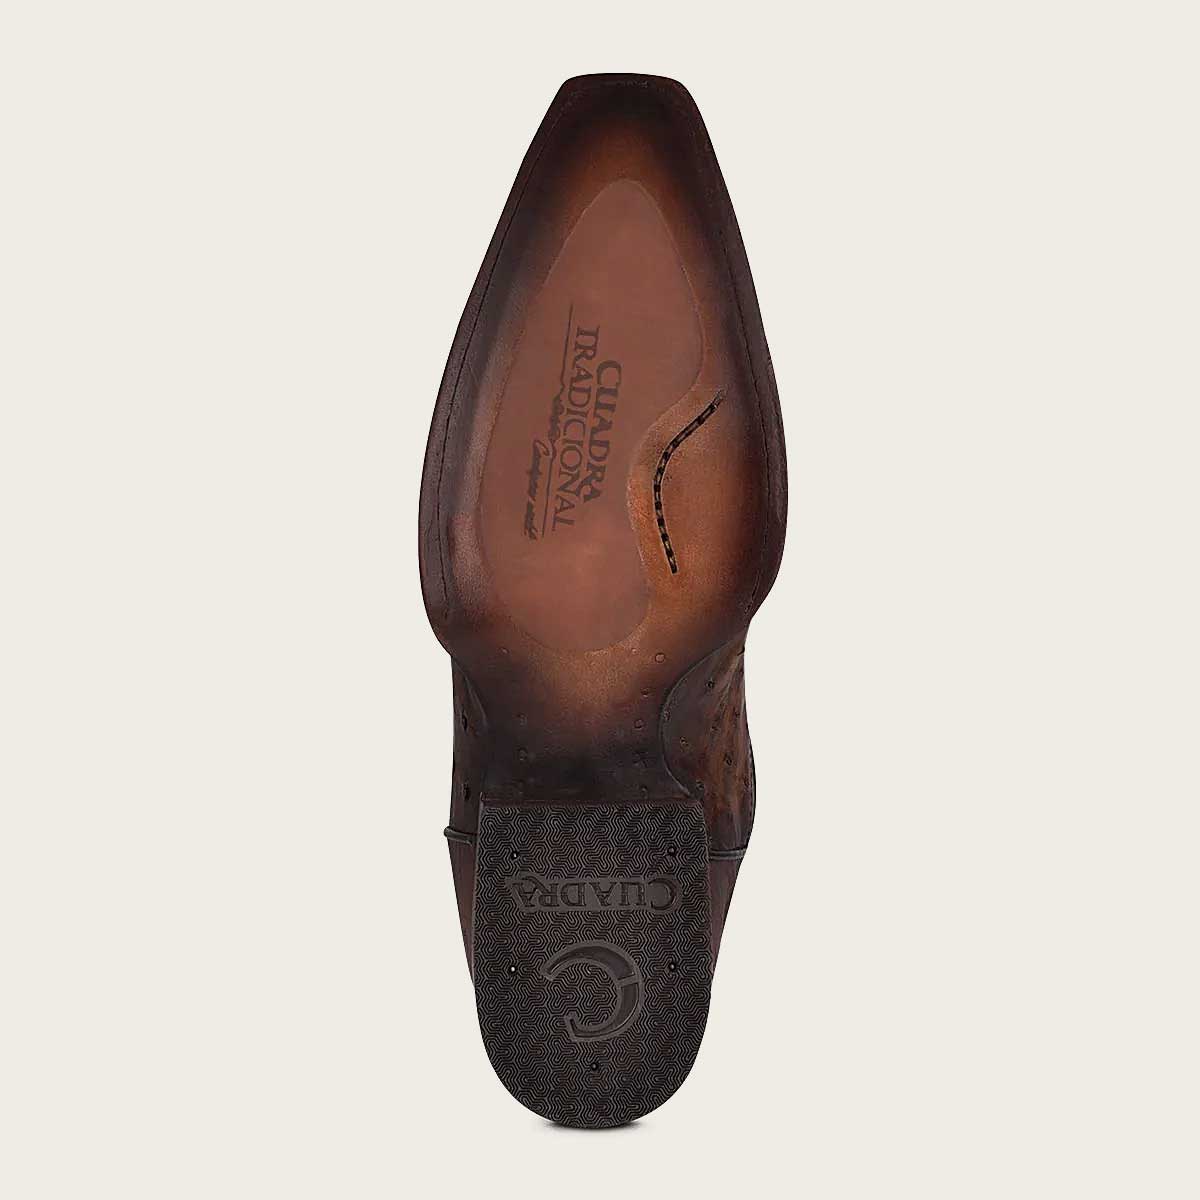 Cuadra Engraved dark brown leather boot